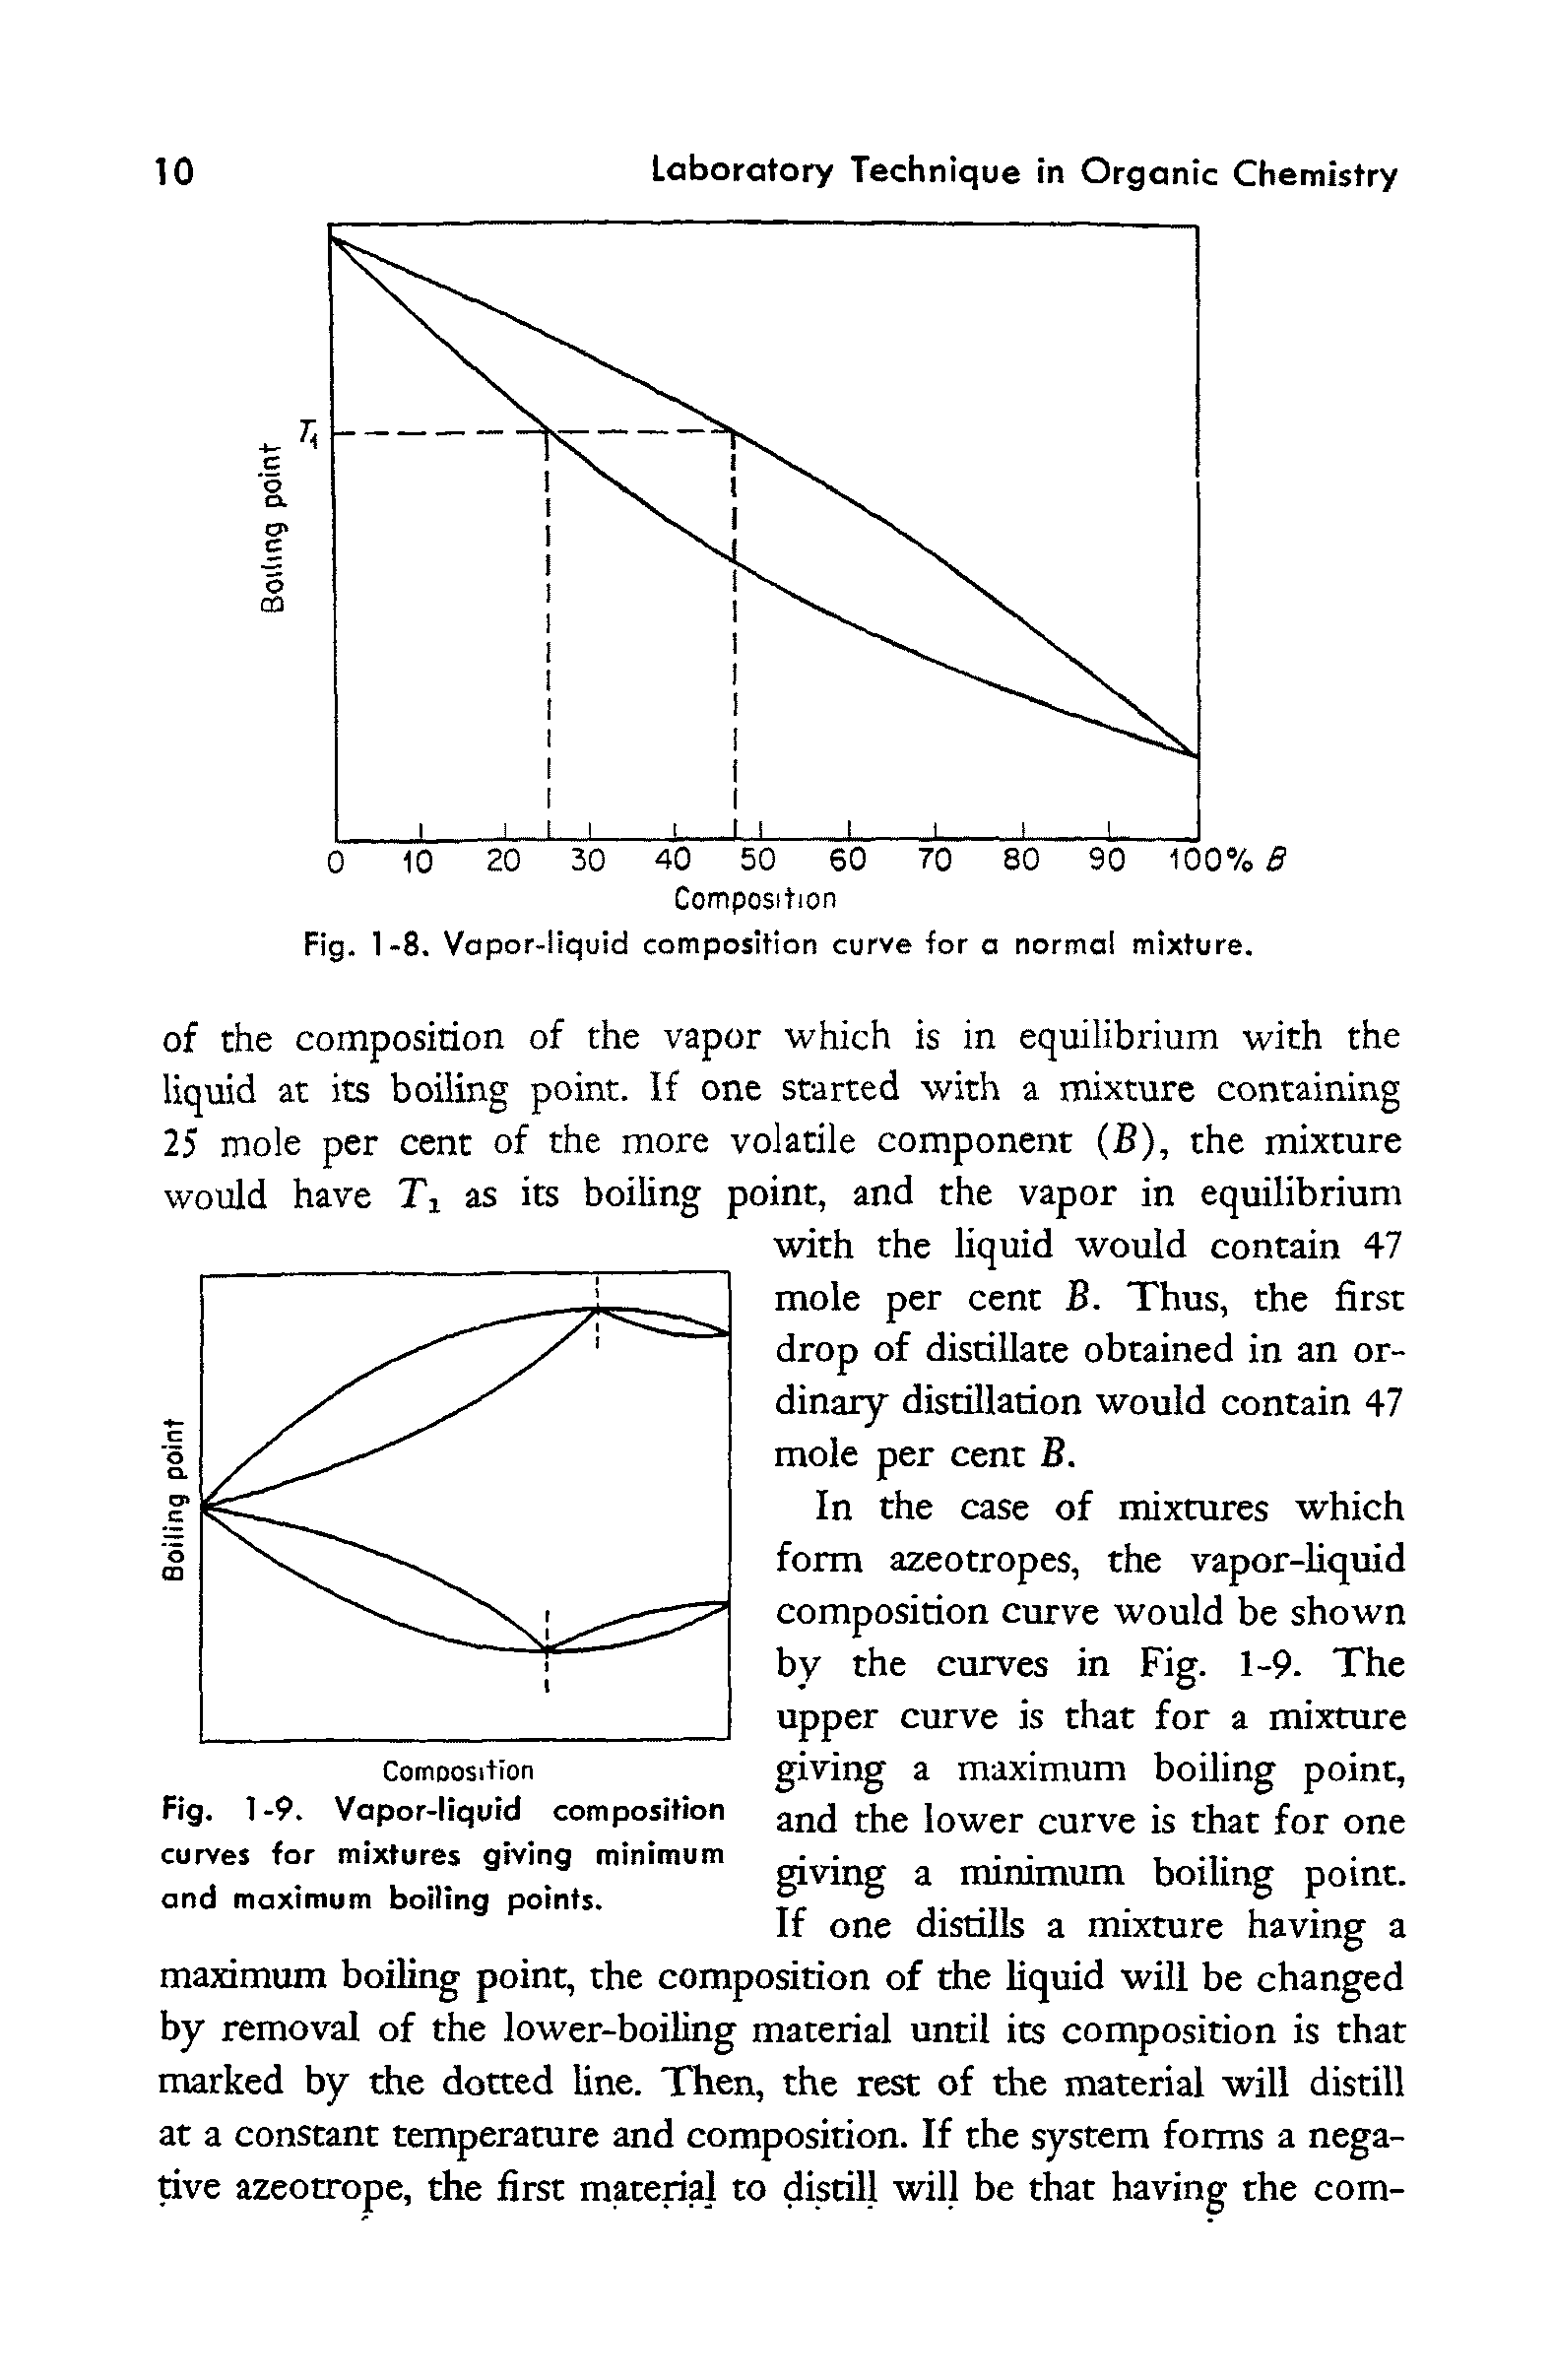 Fig. 1 -9. Vapor-liquid composition curves for mixtures giving minimum and maximum boiling points.